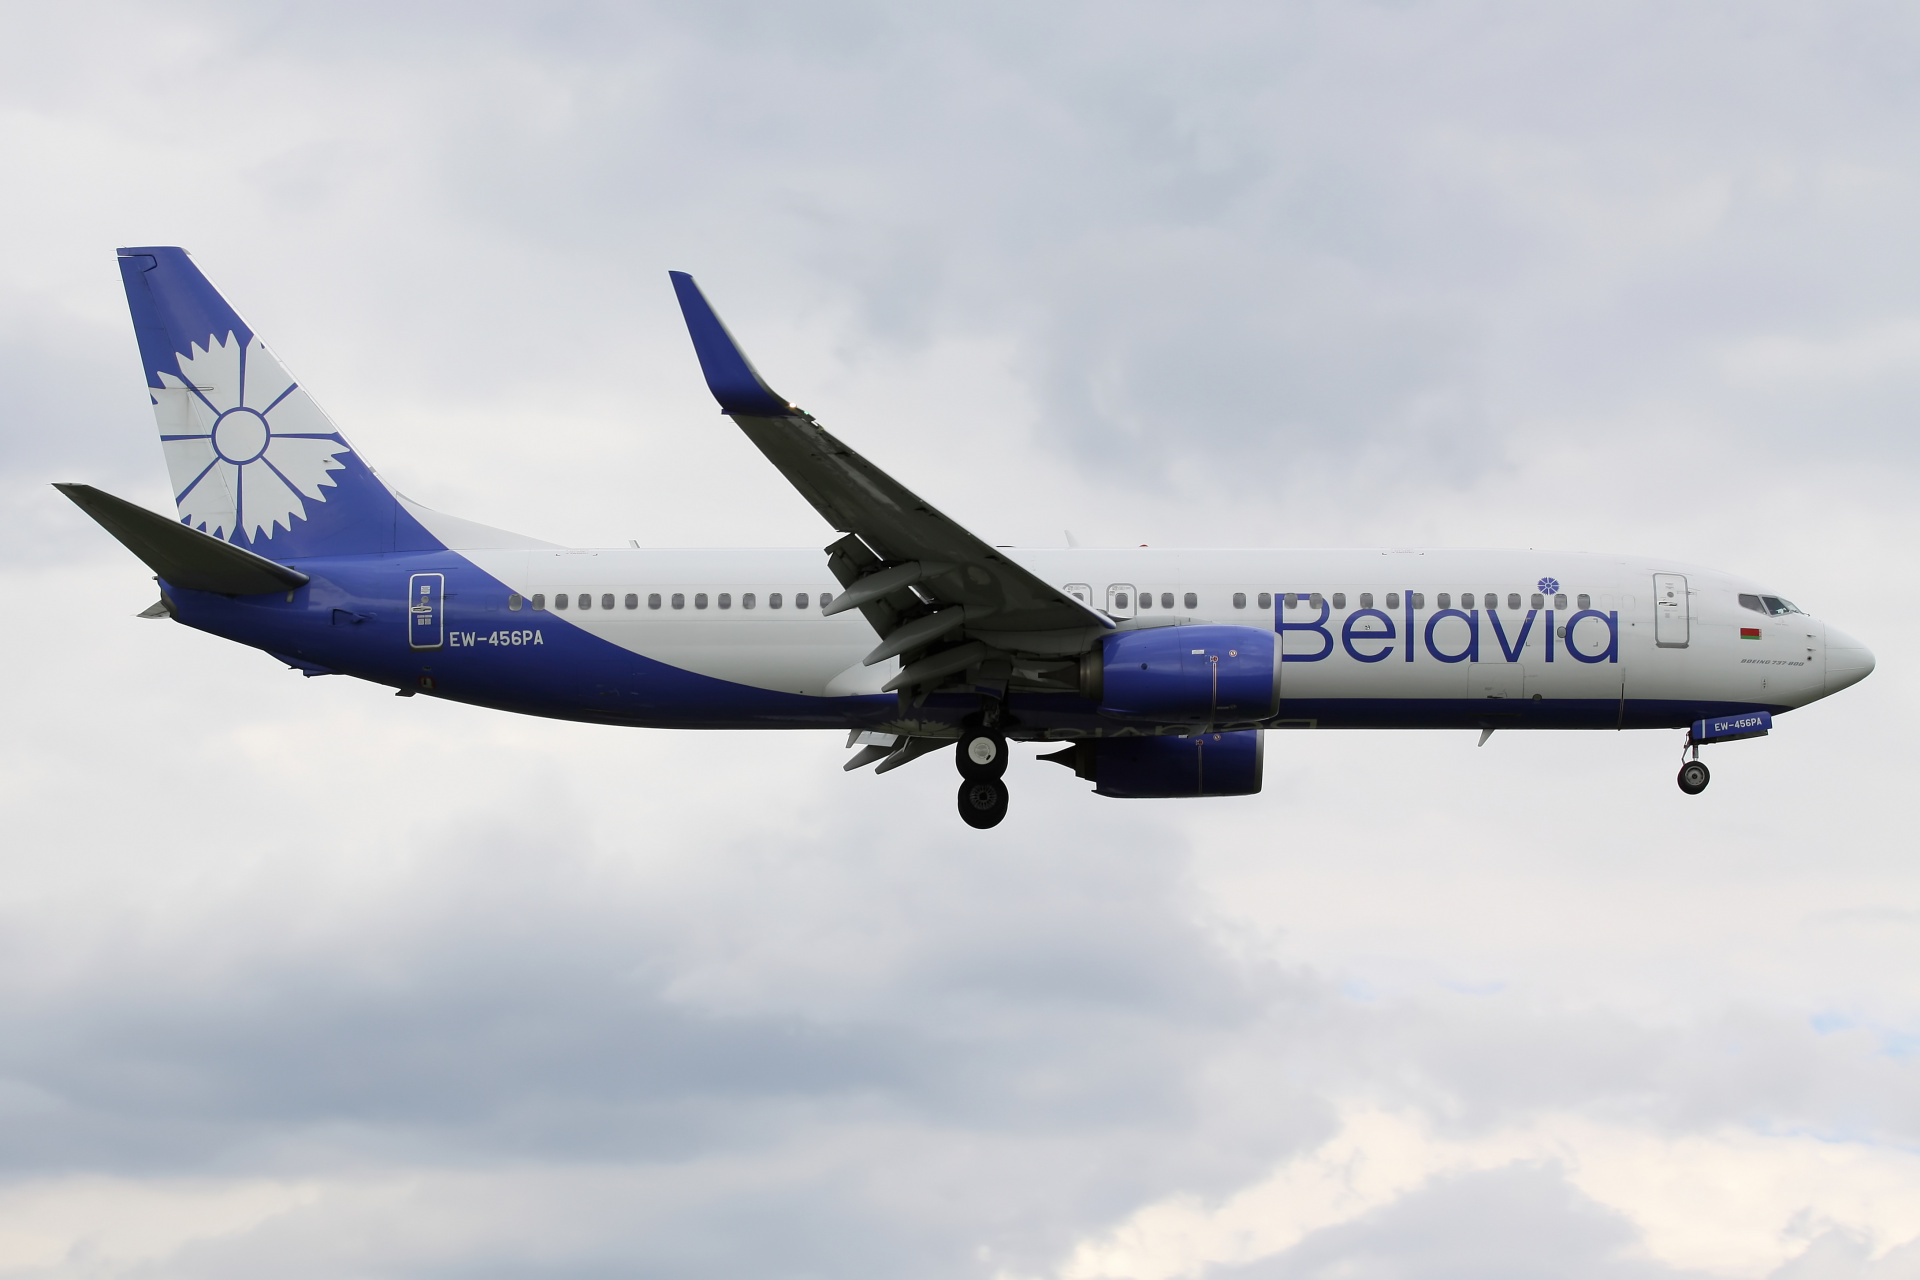 EW-456PA, Belavia (Samoloty » Spotting na EPWA » Boeing 737-800)